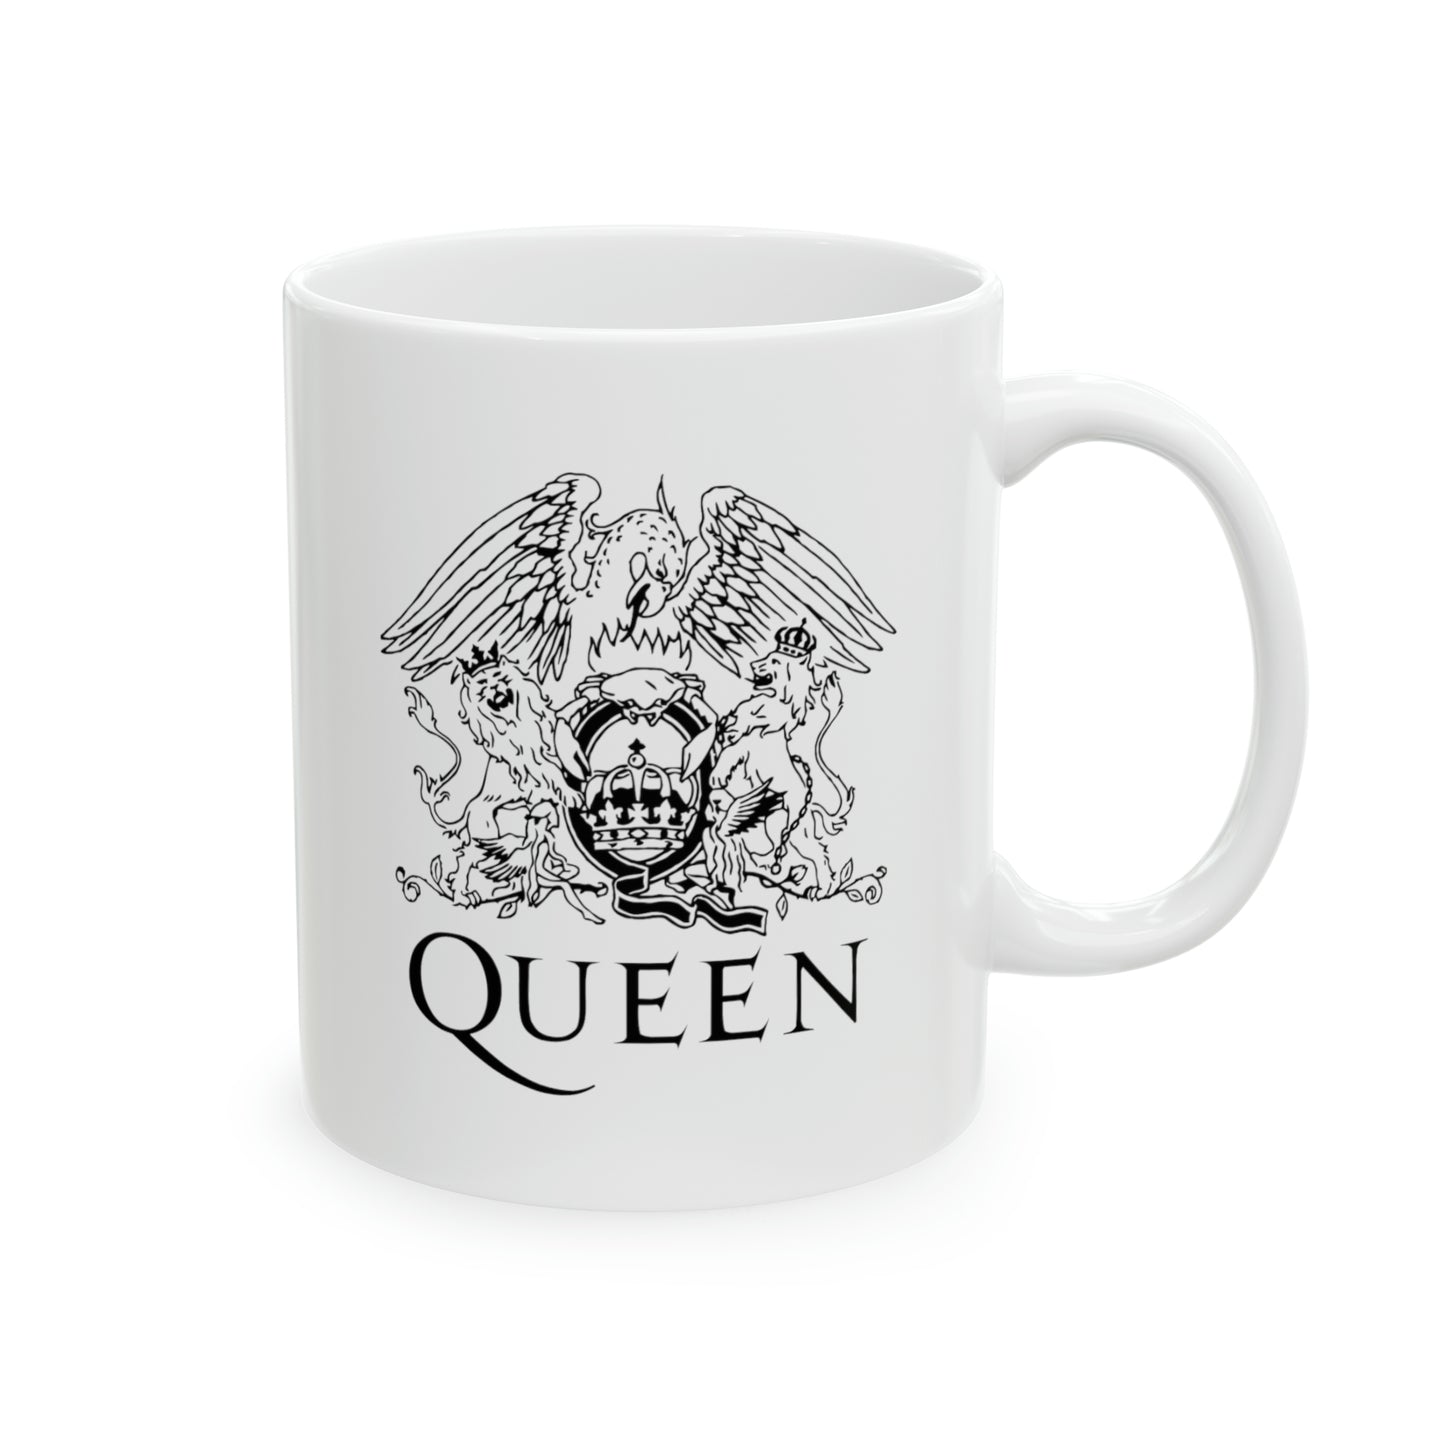 Queen Coffee Mug - Double Sided White Ceramic 11oz by TheGlassyLass.com